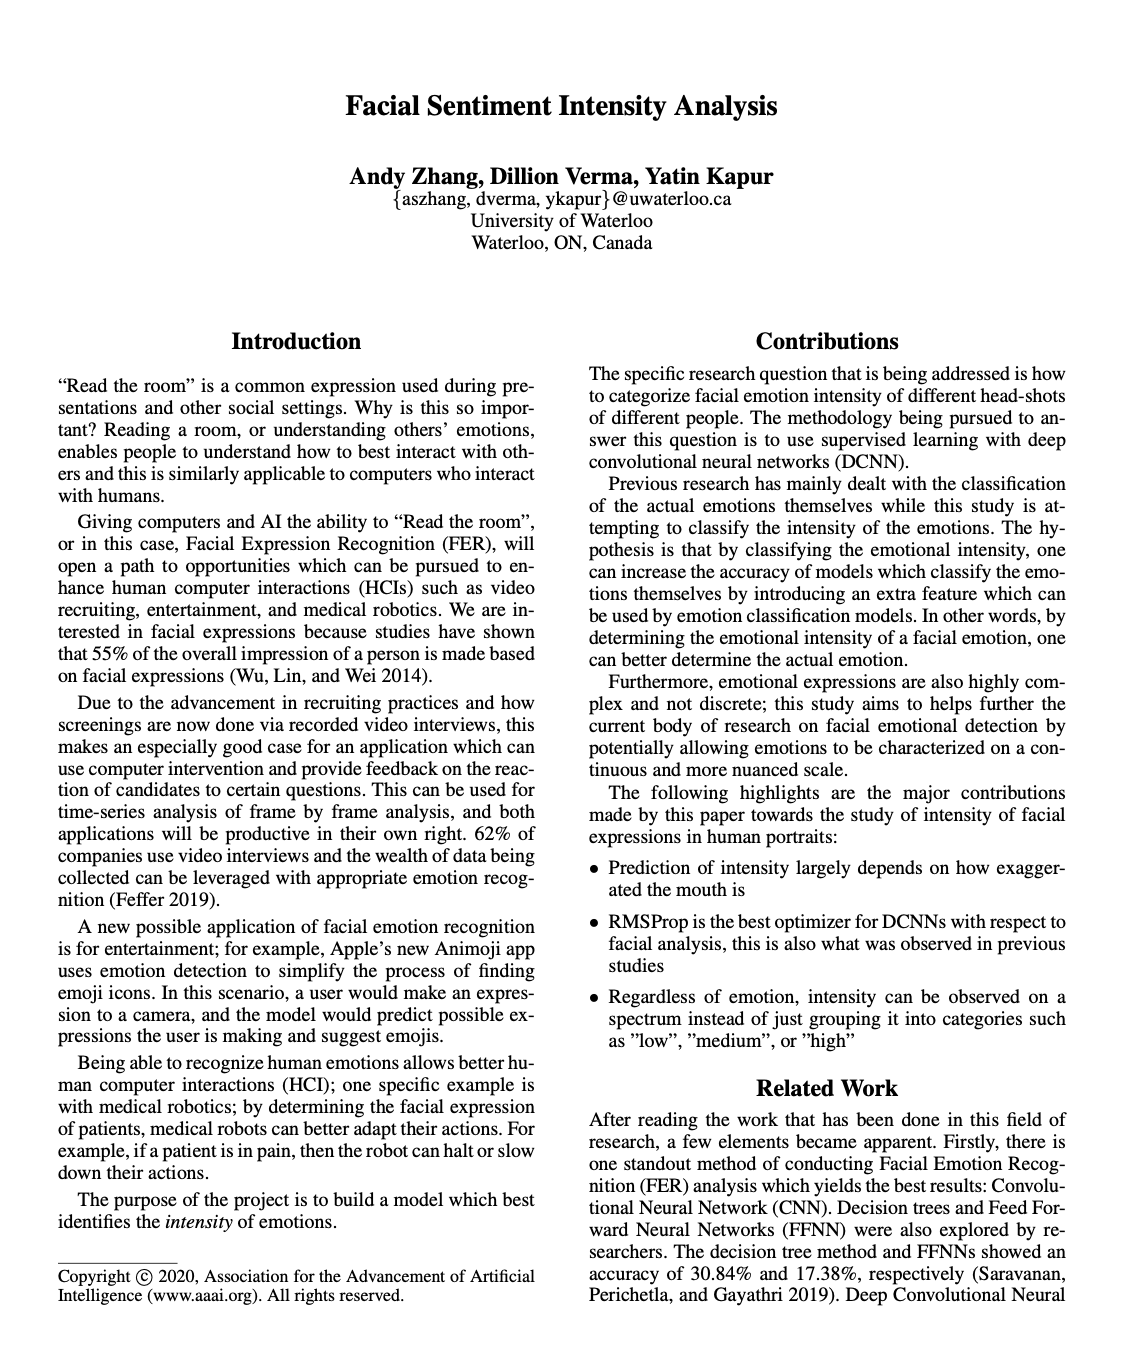 Facial Sentiment Intensity Analysis Paper